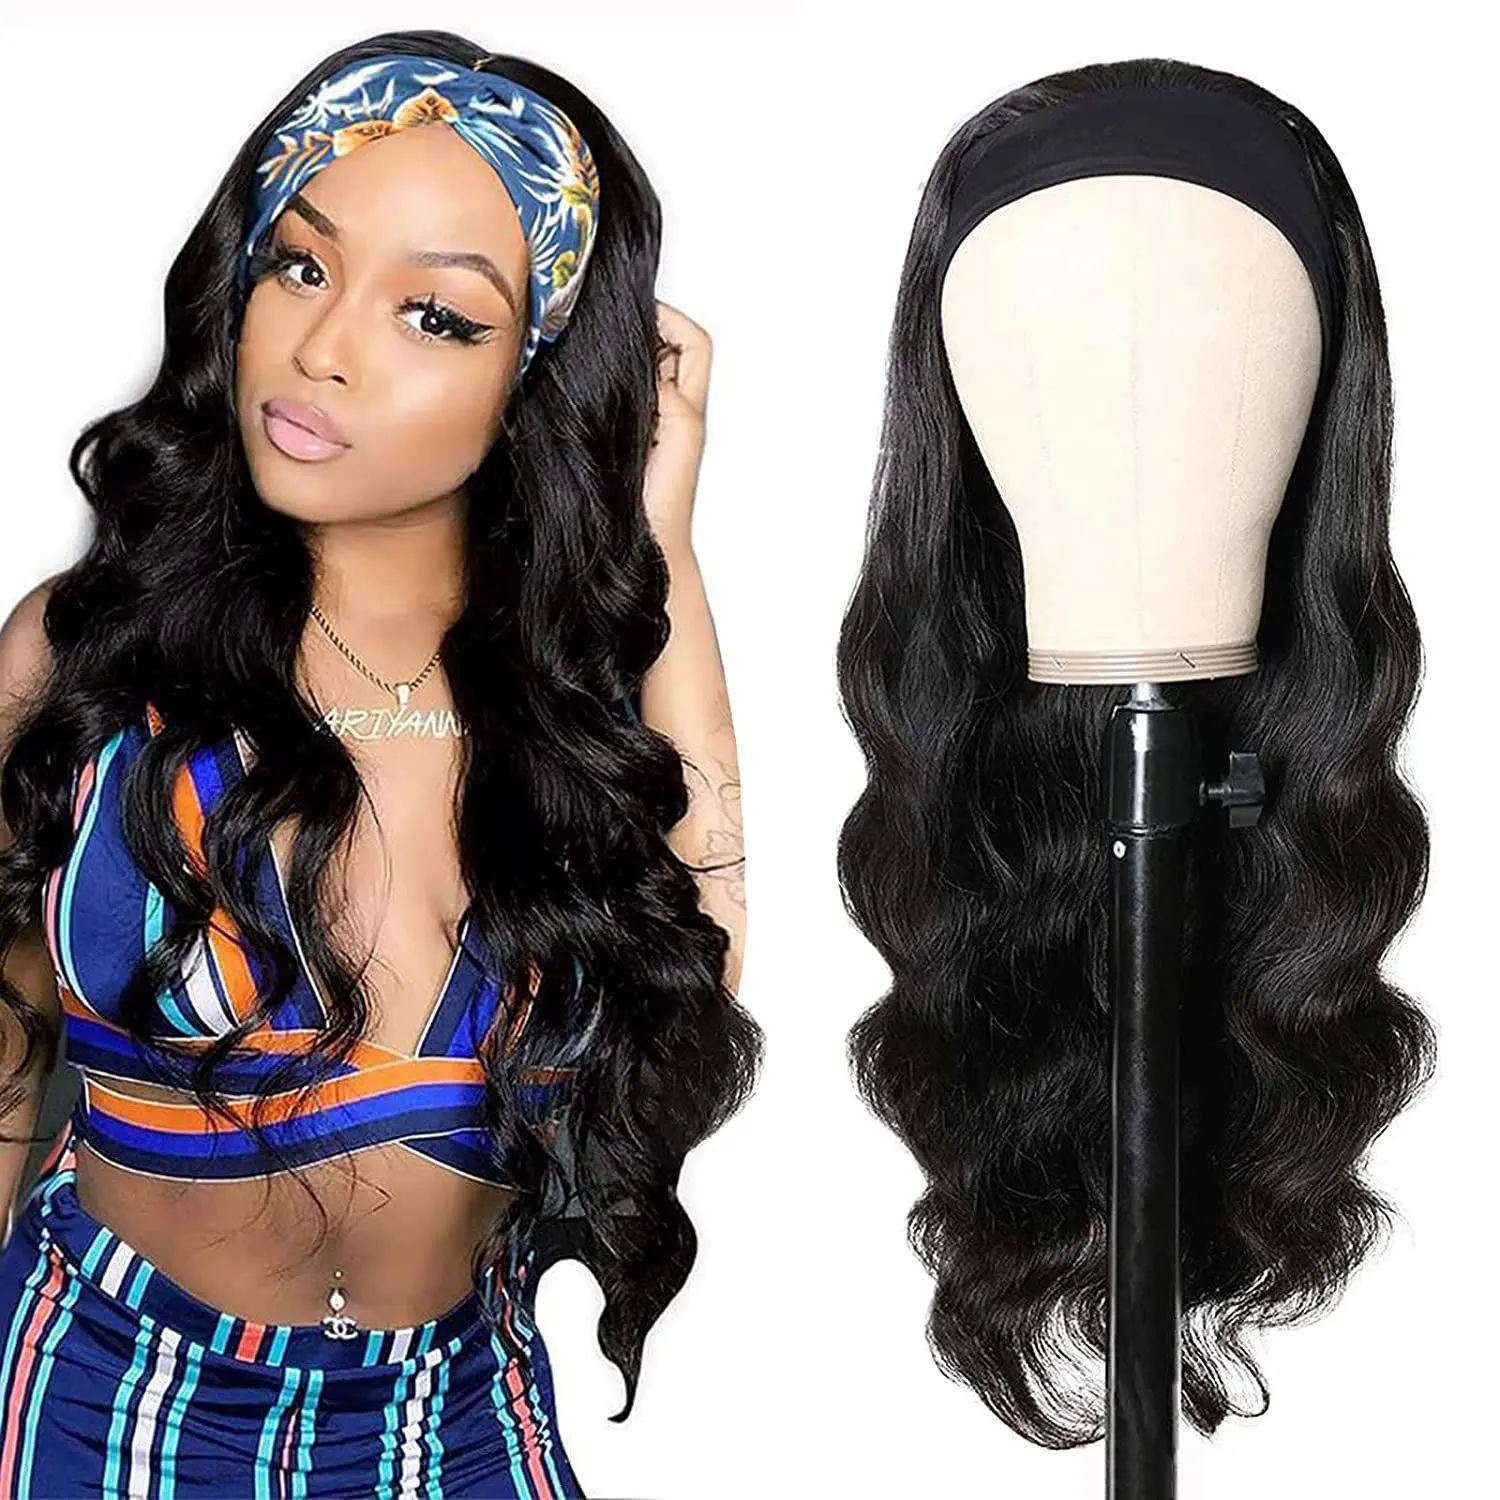 Wholesale Headband Wigs For Black Women,Remy Human Hair water wave Headband Wig,headband wig with bangs Human Hair Wig vendor